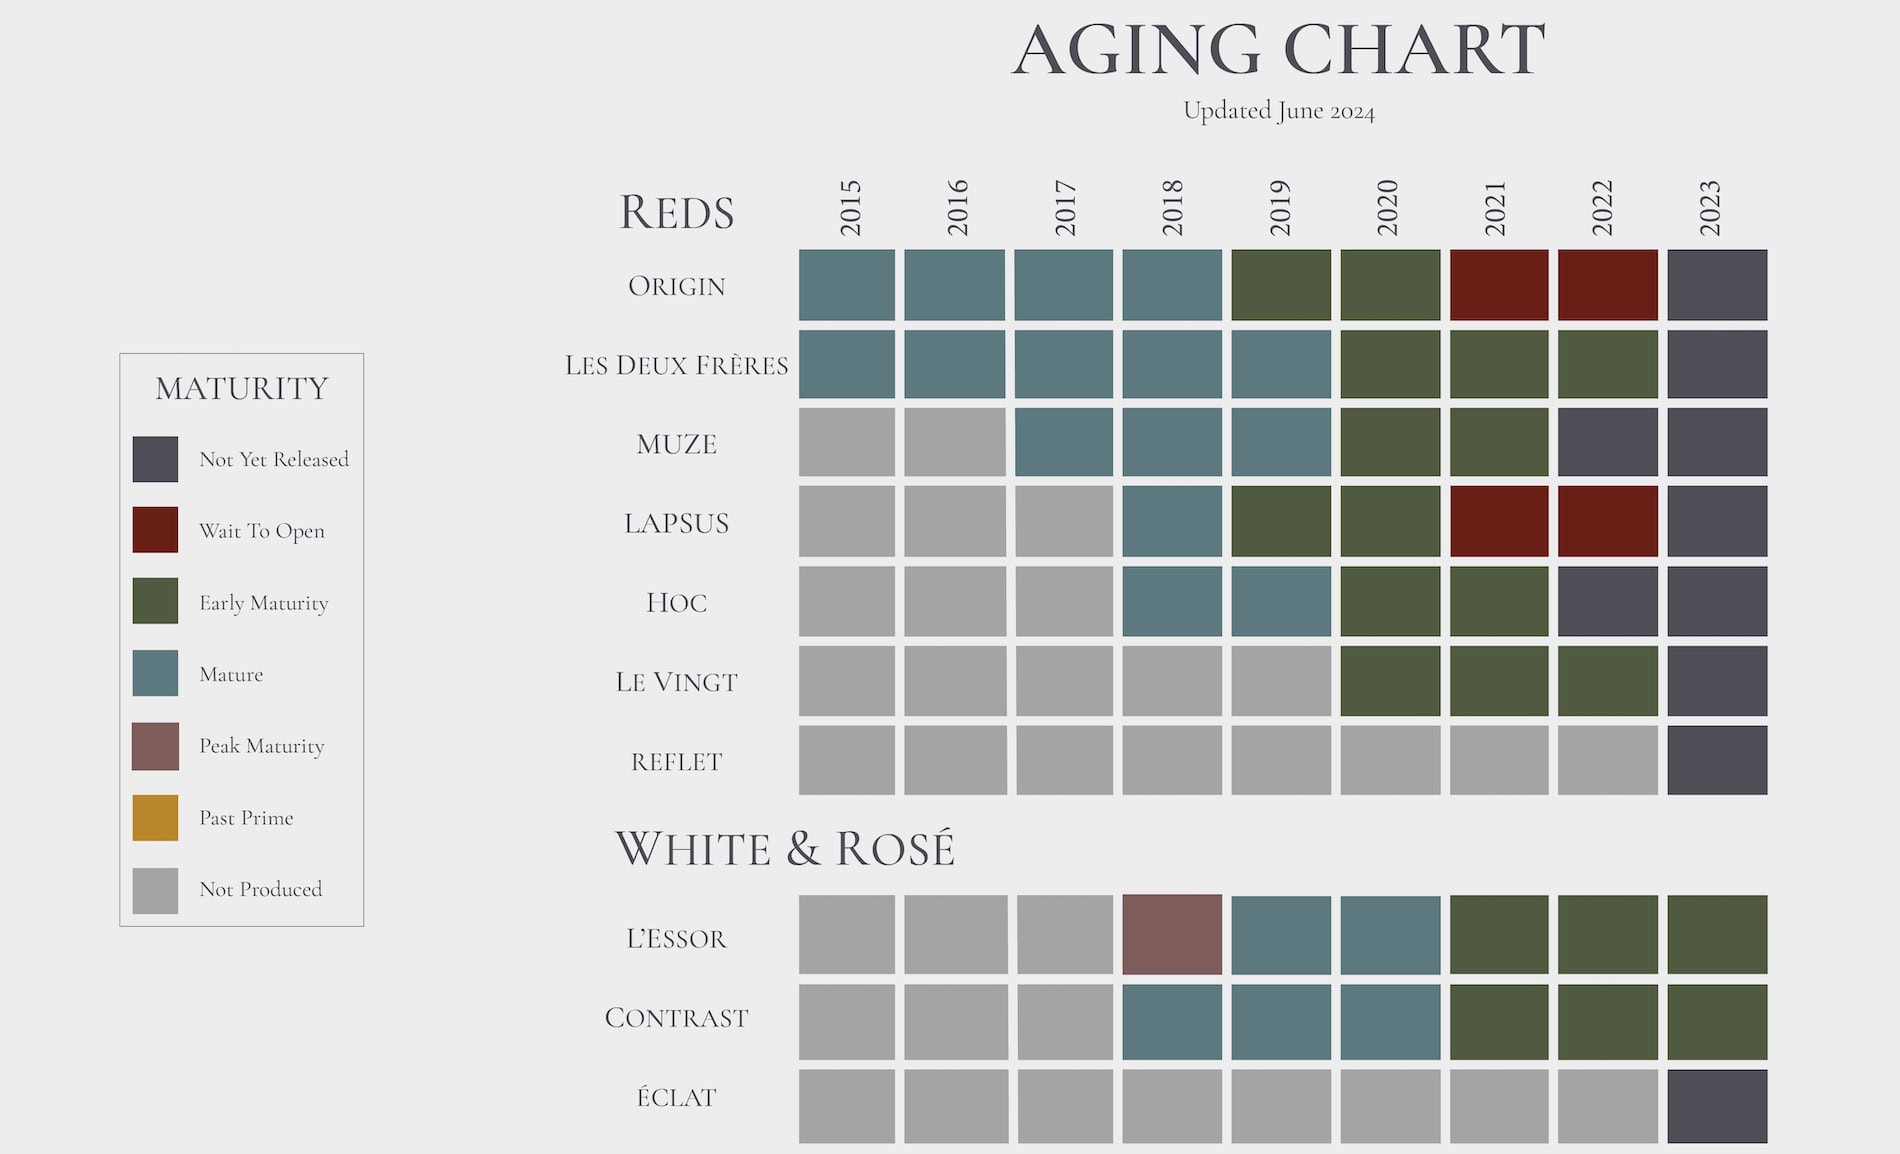 BENOM Wine Aging Chart